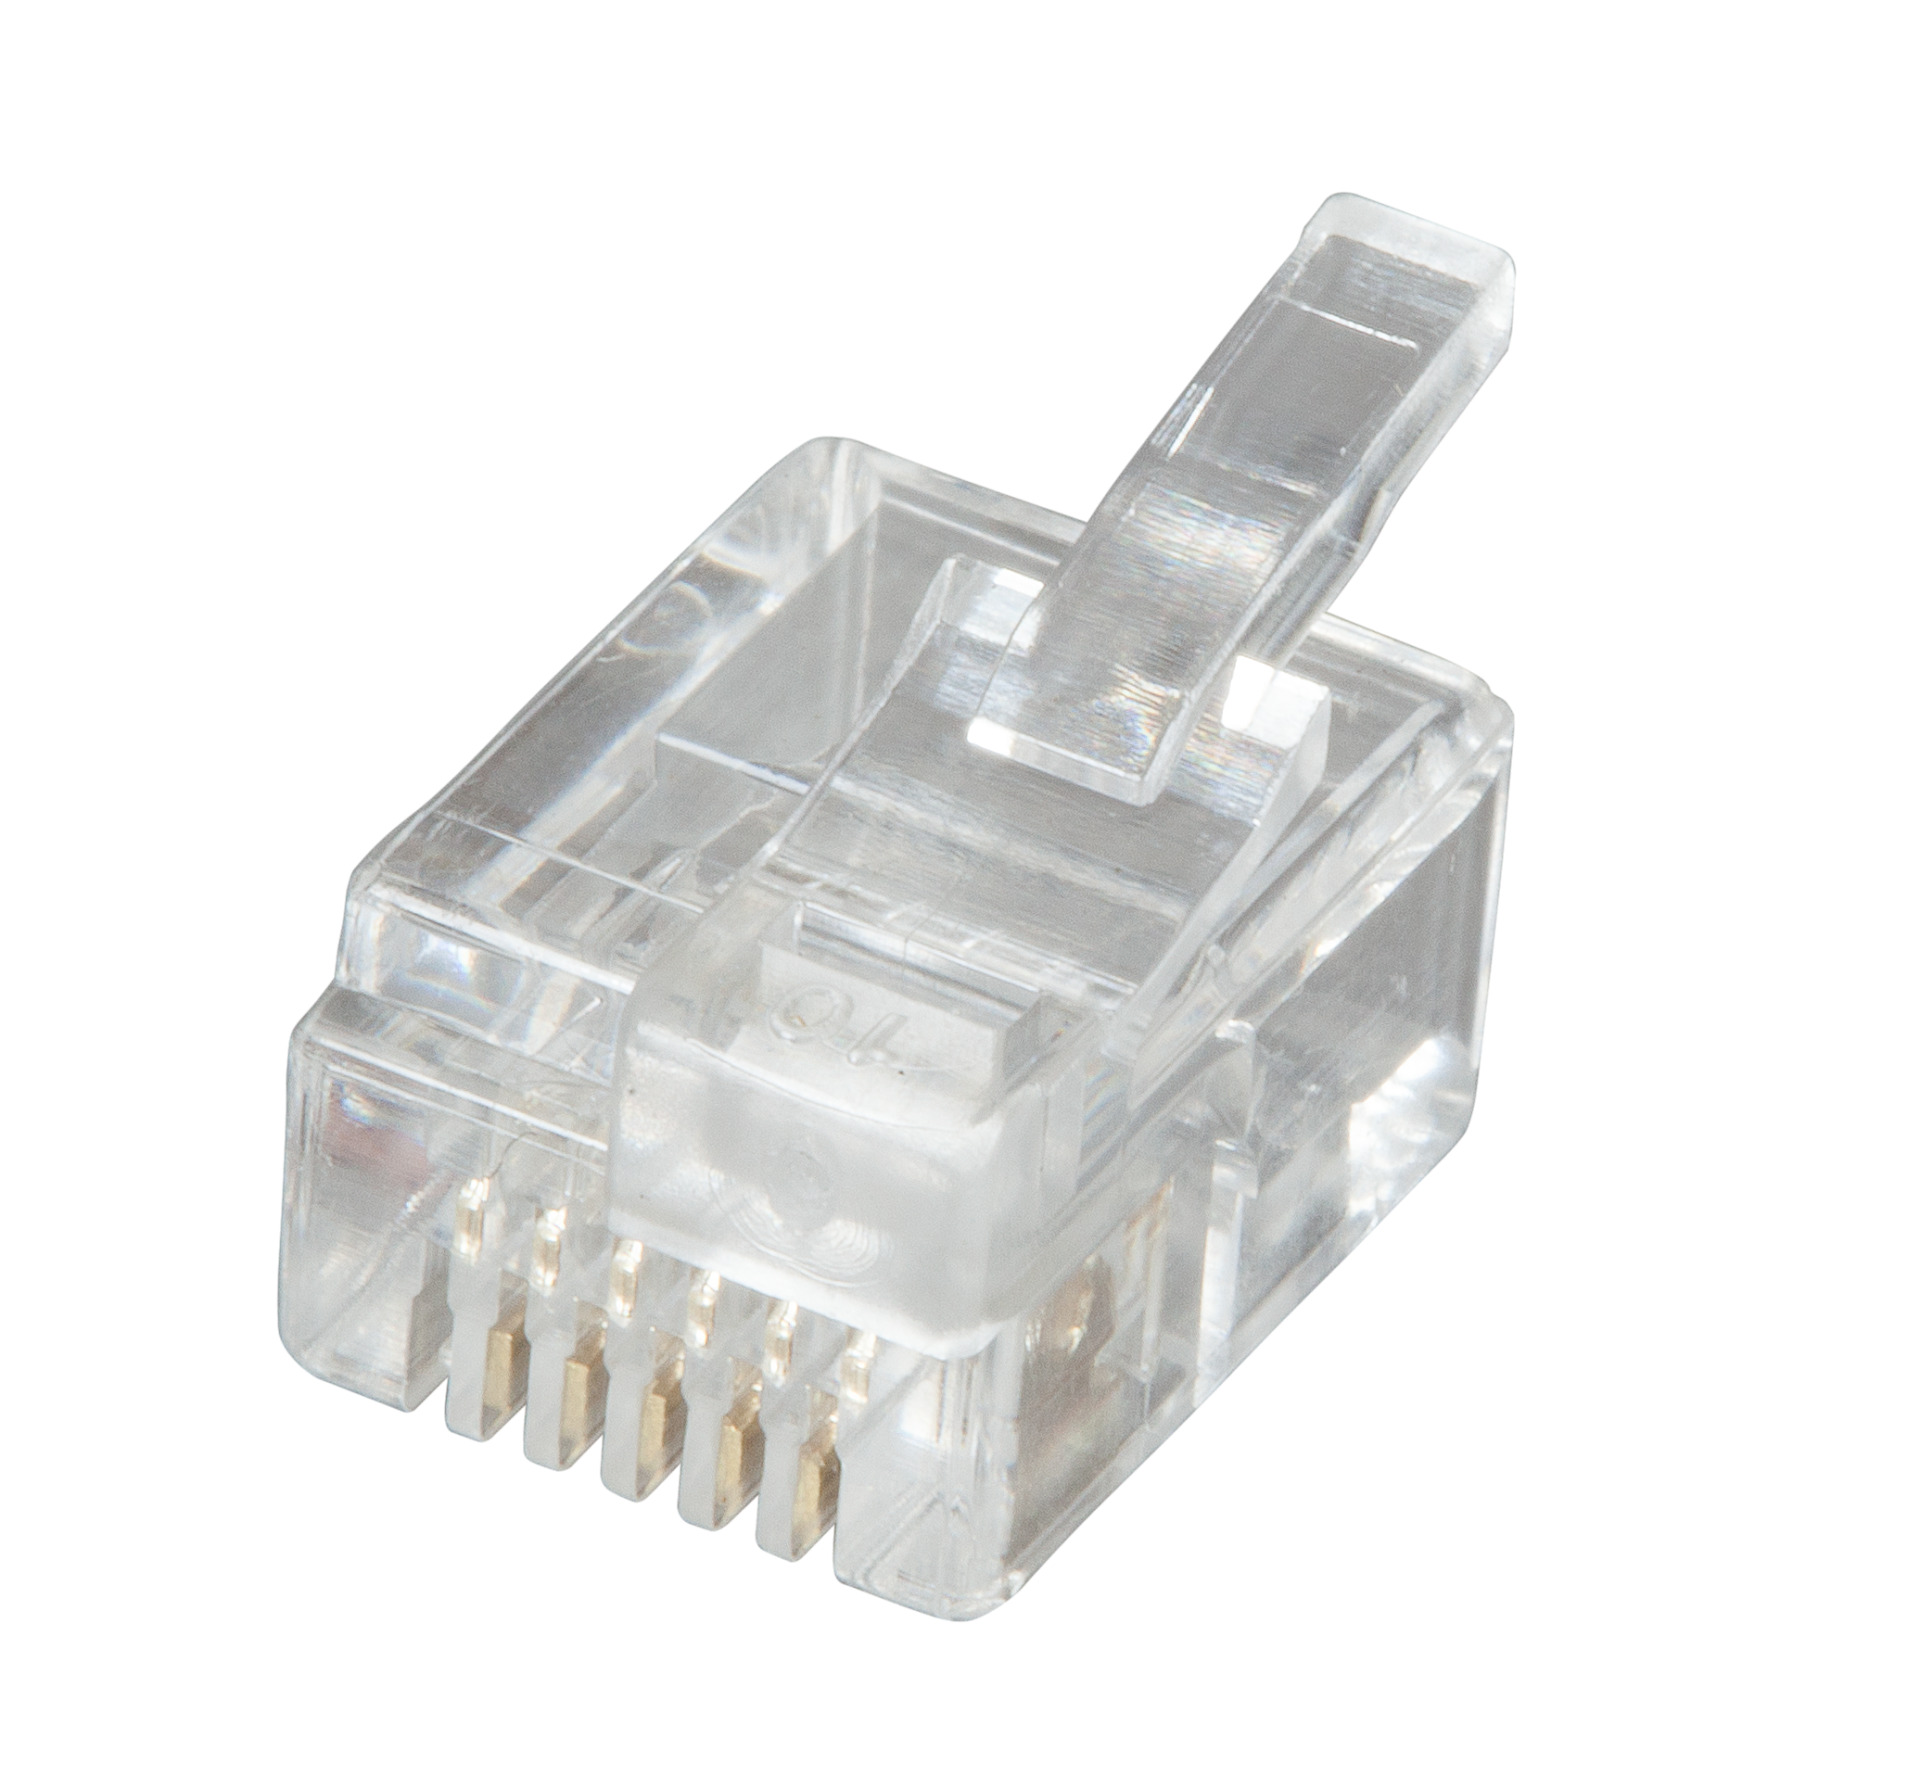 Modular-Connector DEC UTP, E-MO 6/6 SF, 100 pcs.